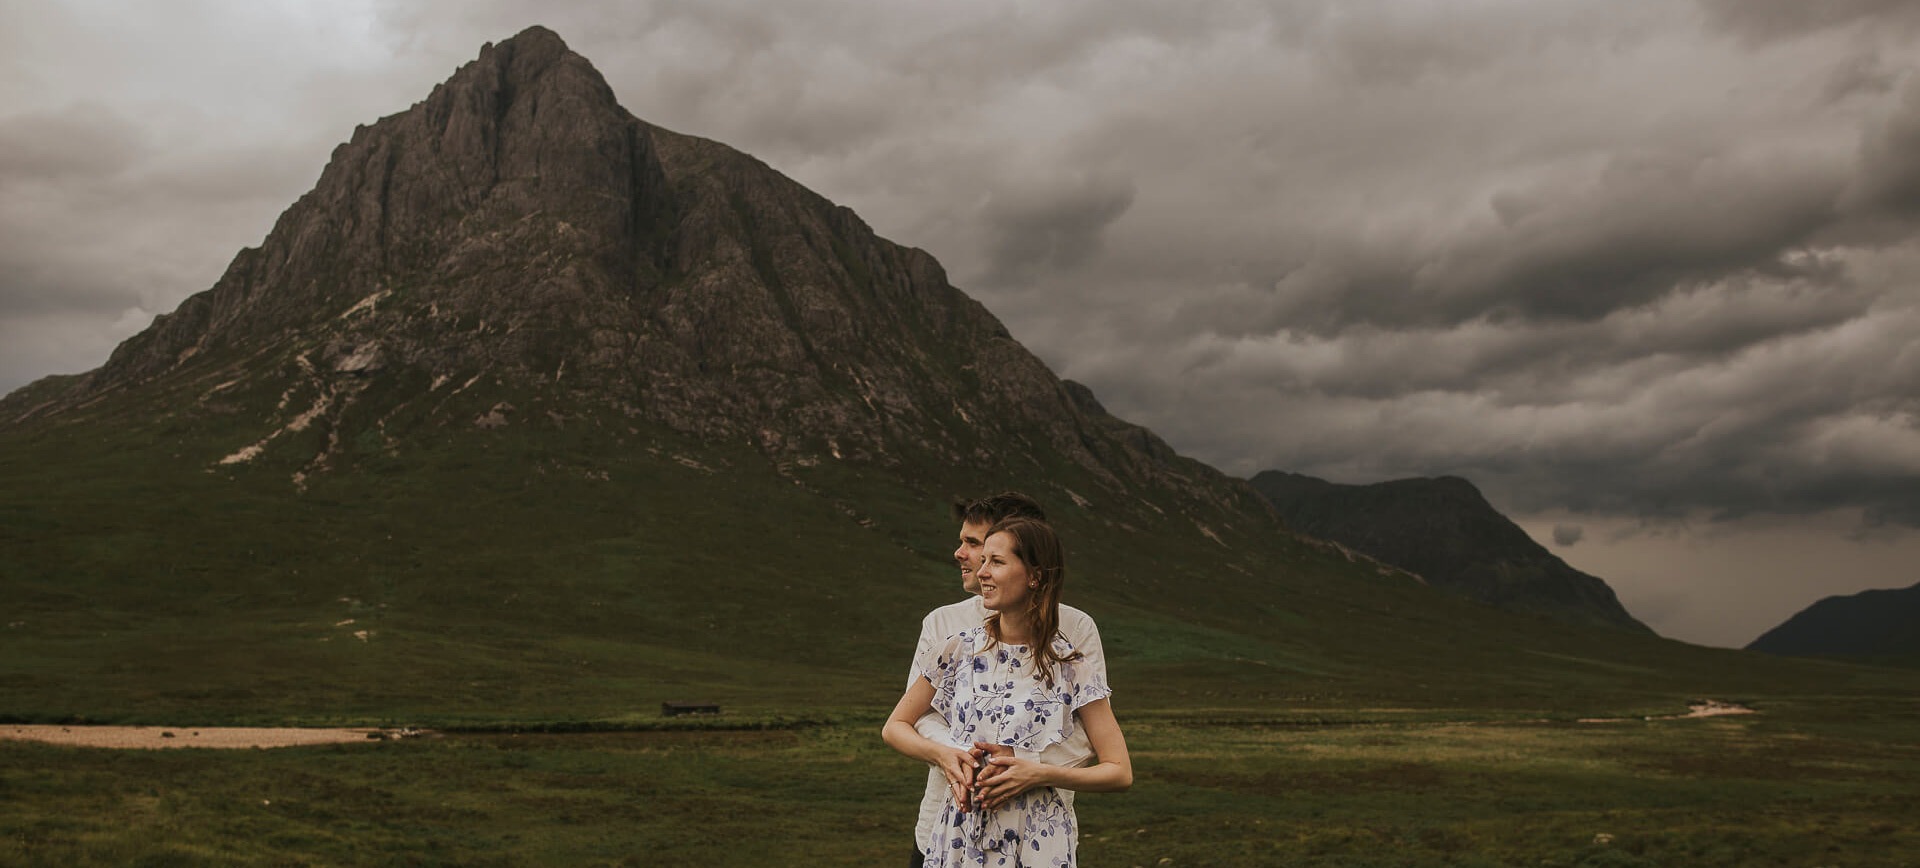 glend coe couple photo session - couple portrait in scottish highlands